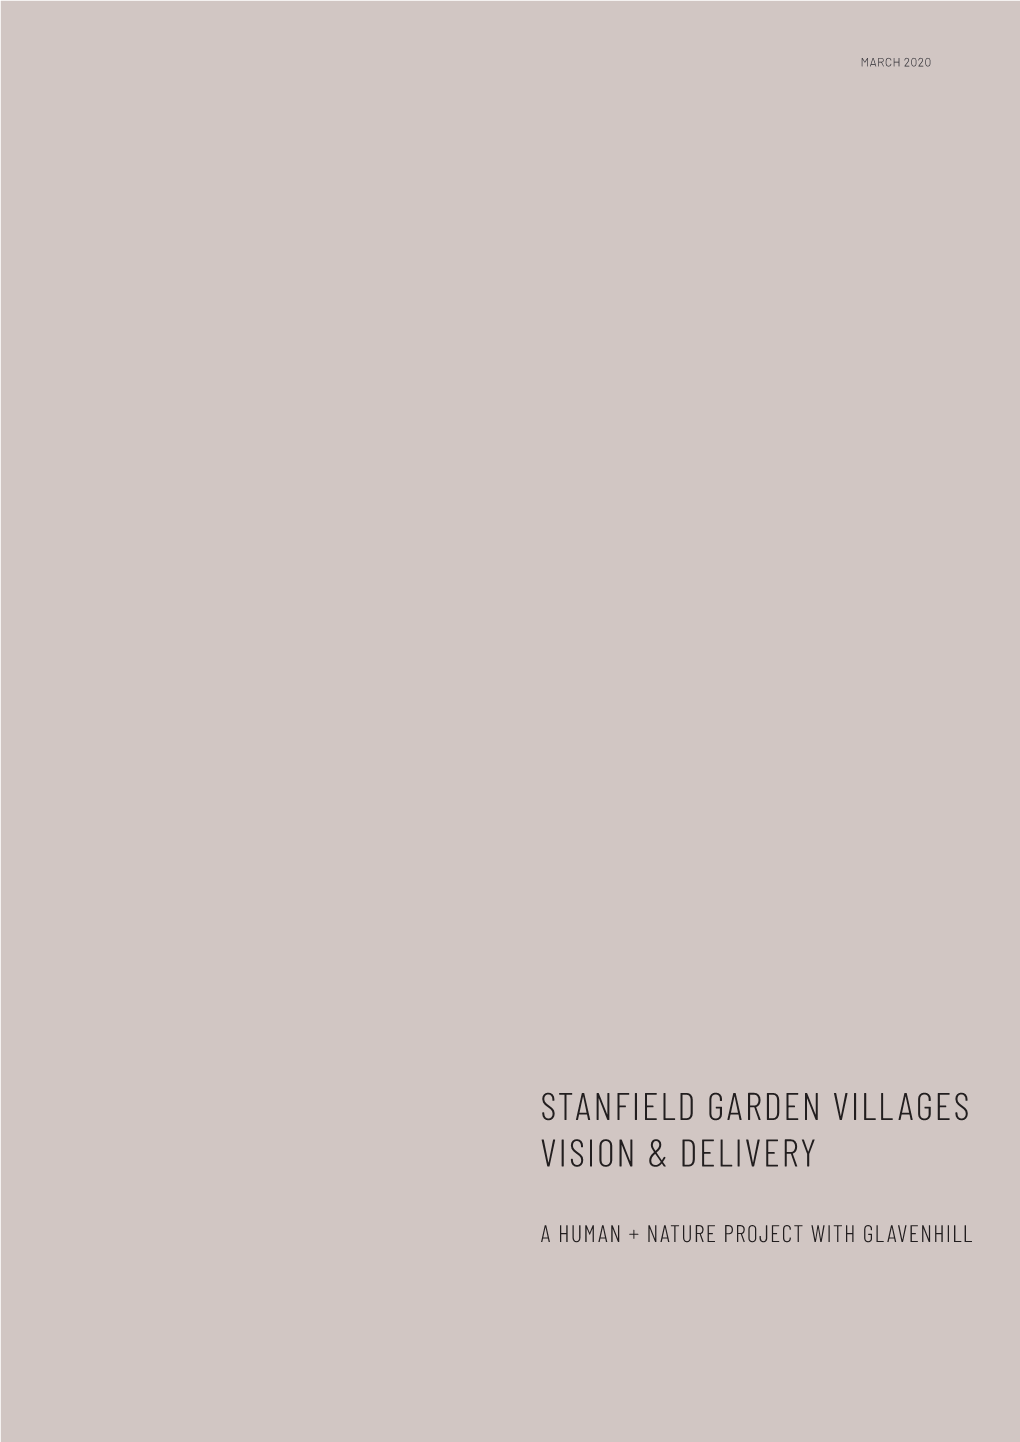 Stanfield Garden Villages Vision & Delivery